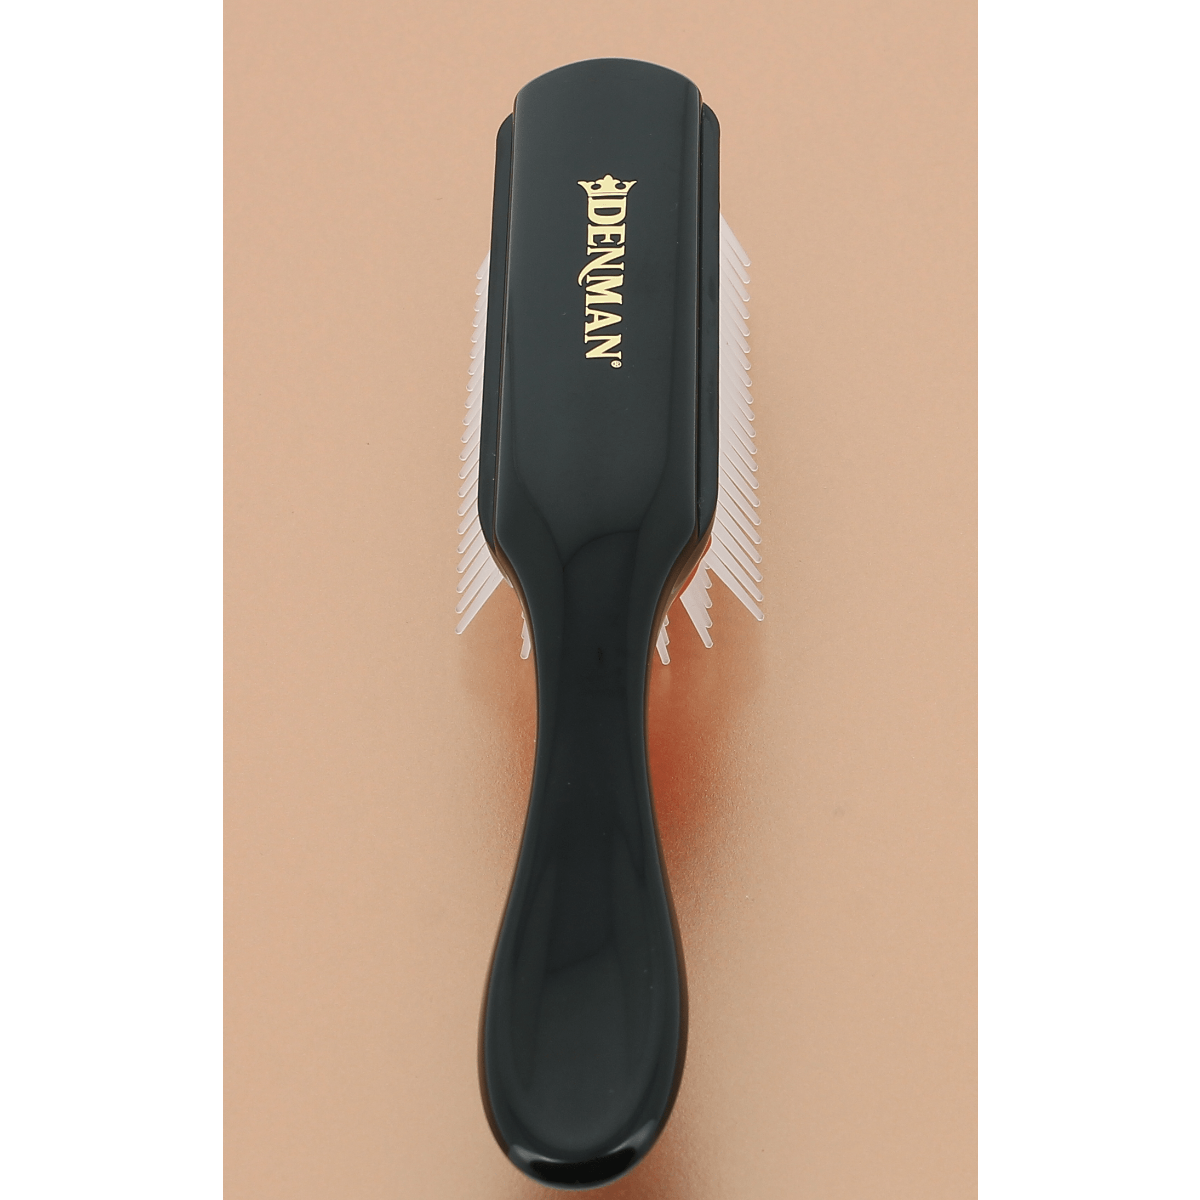 Buy Denman D3 Medium Styling Brush | Salon Wholesale